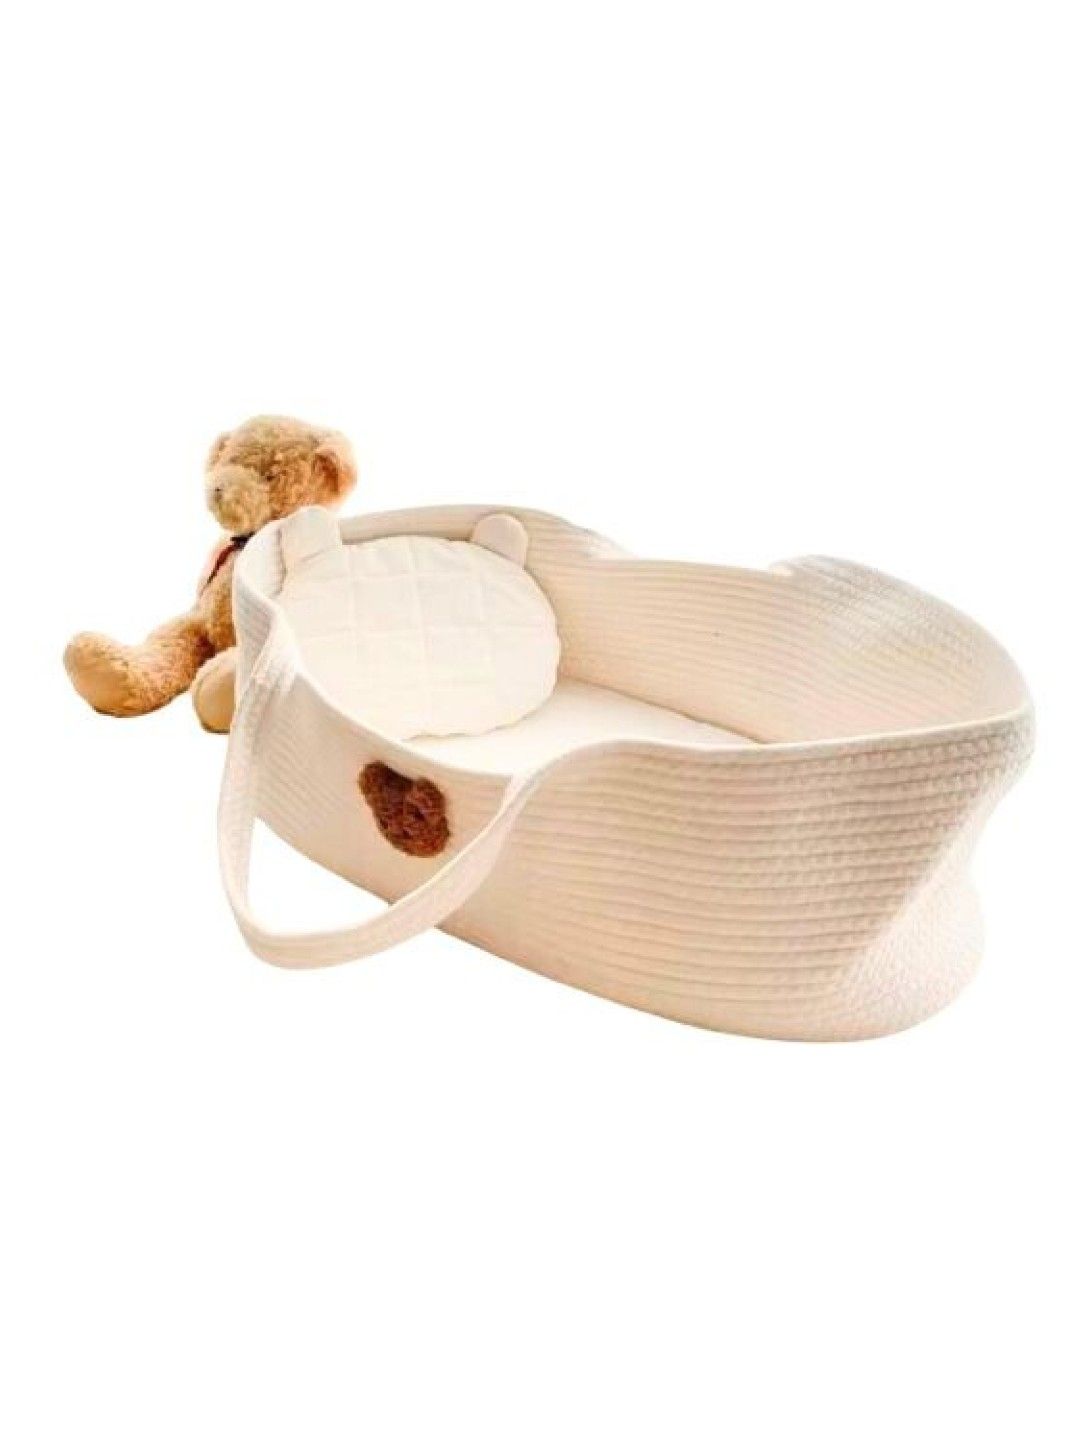 The Baby Basket Portable Bear Design Woven Moses Baby Basket